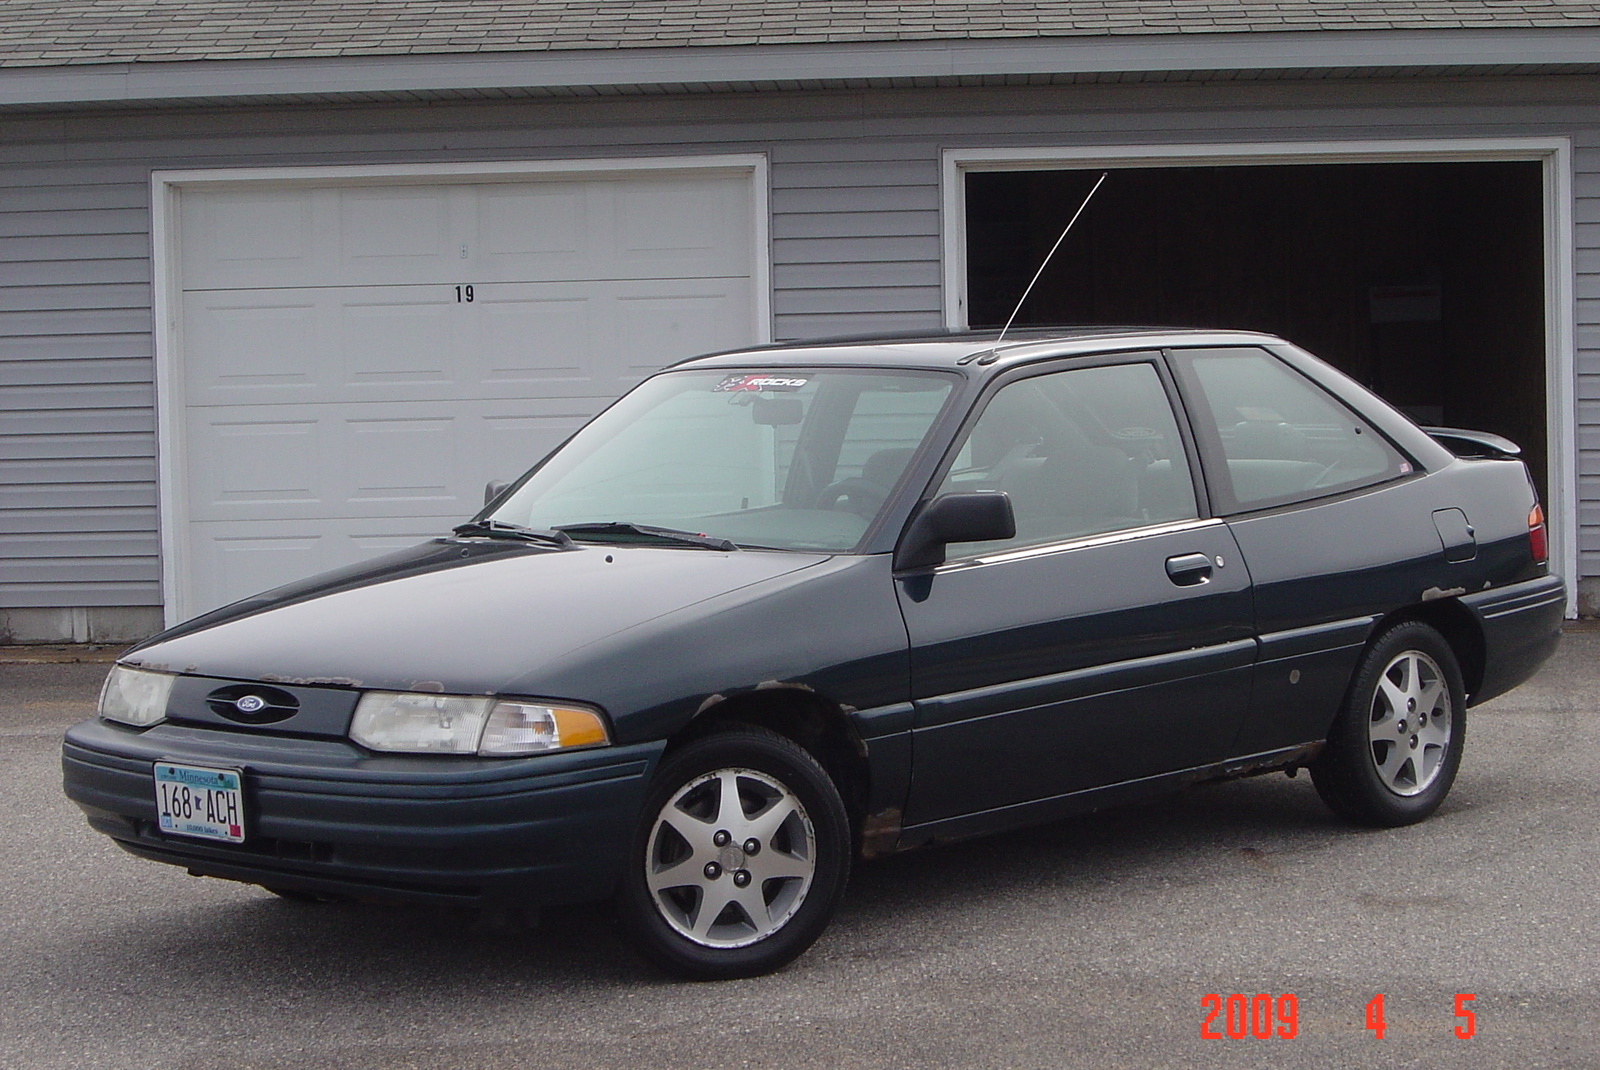 1995 Ford escort lx hatchback review #4